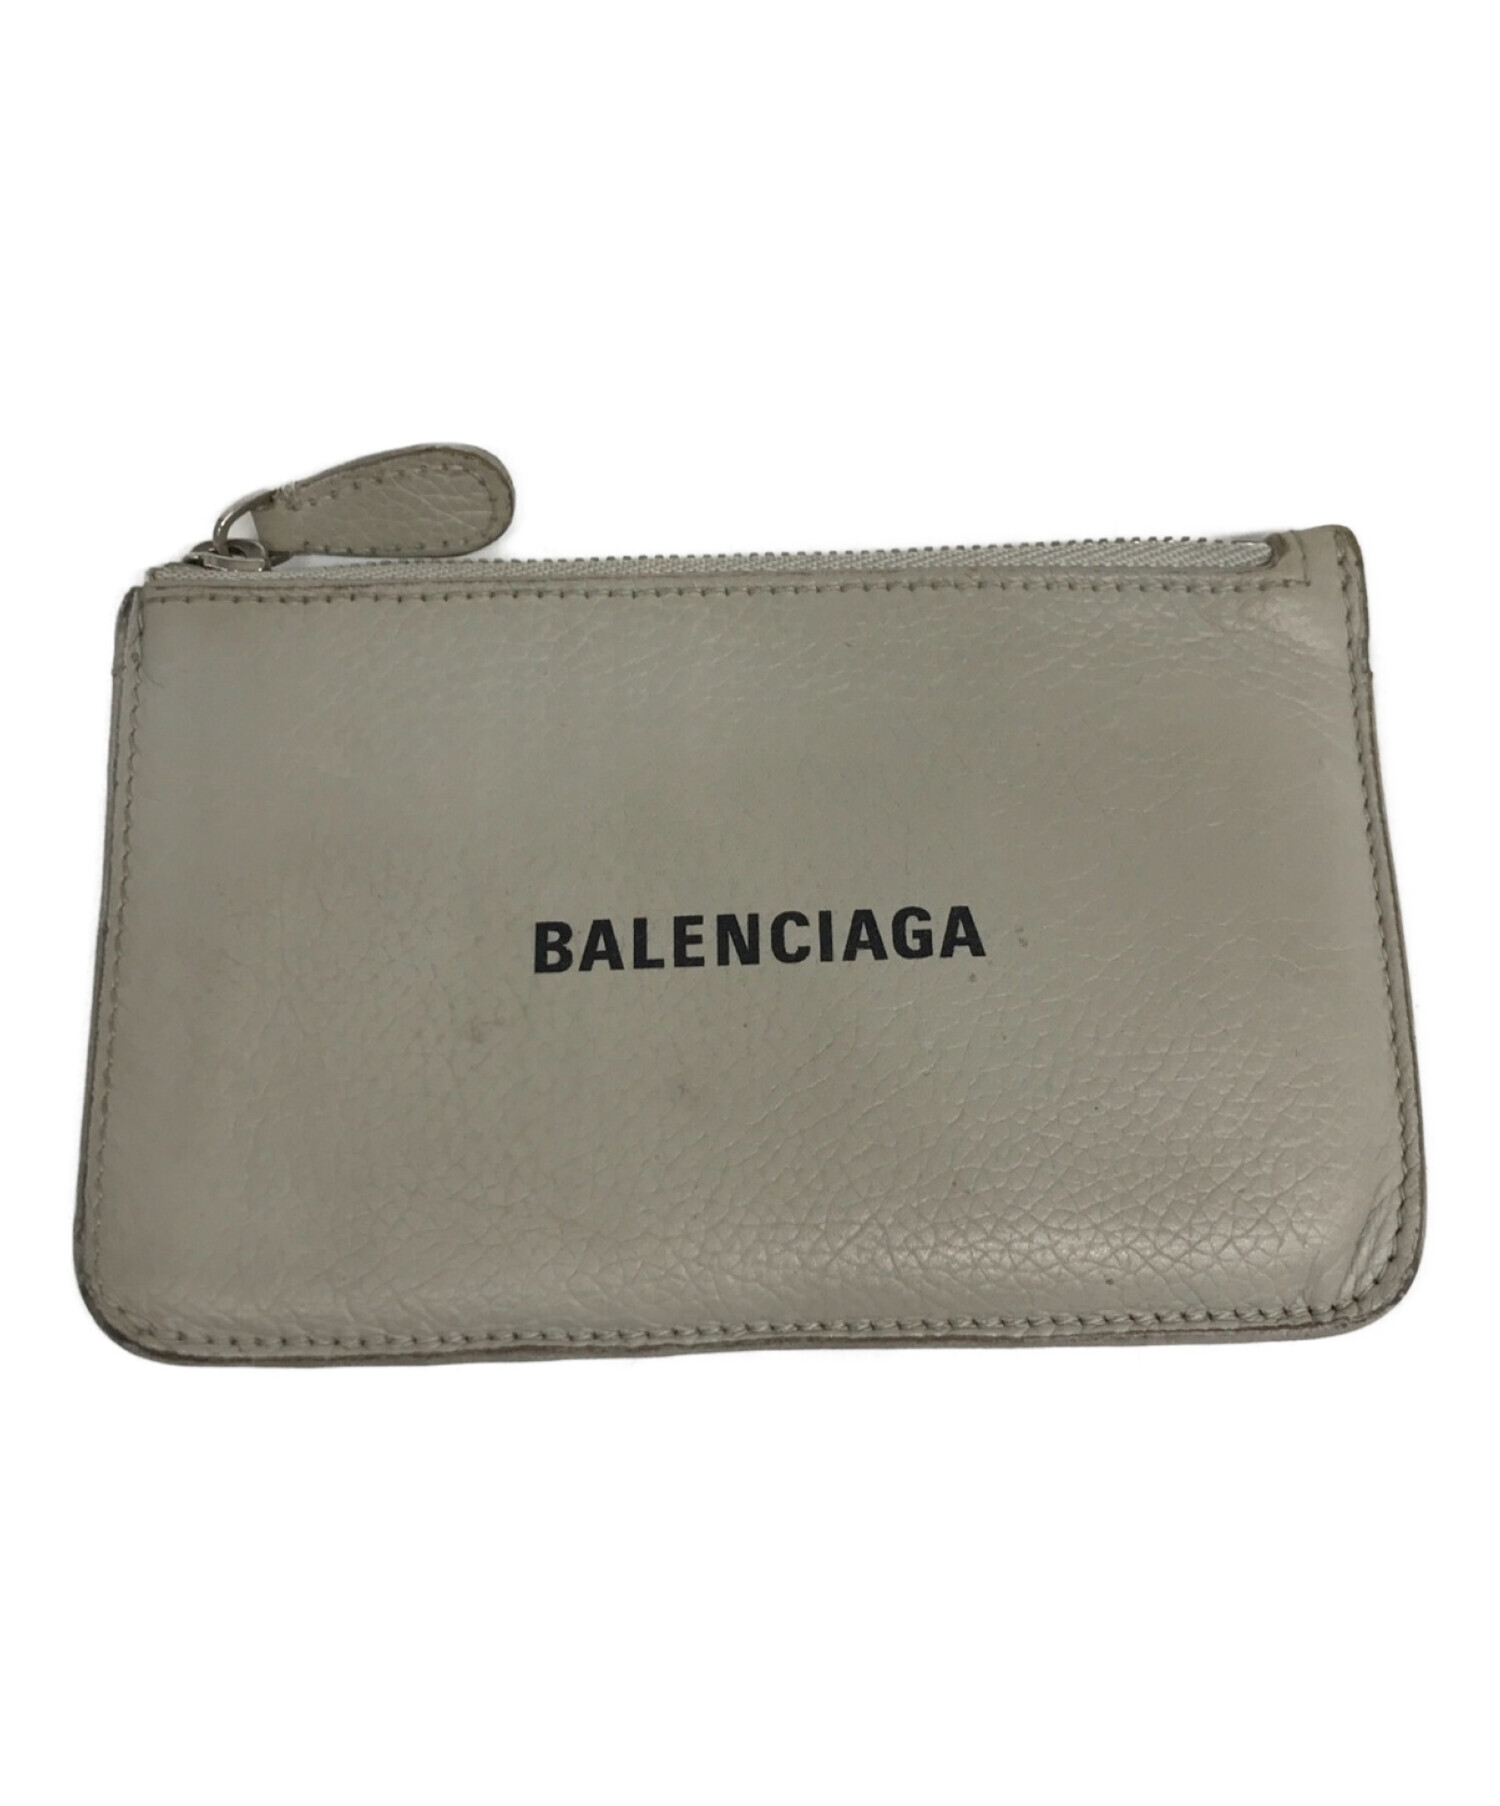 BALENCIAGA (バレンシアガ) コインカードケース グレー